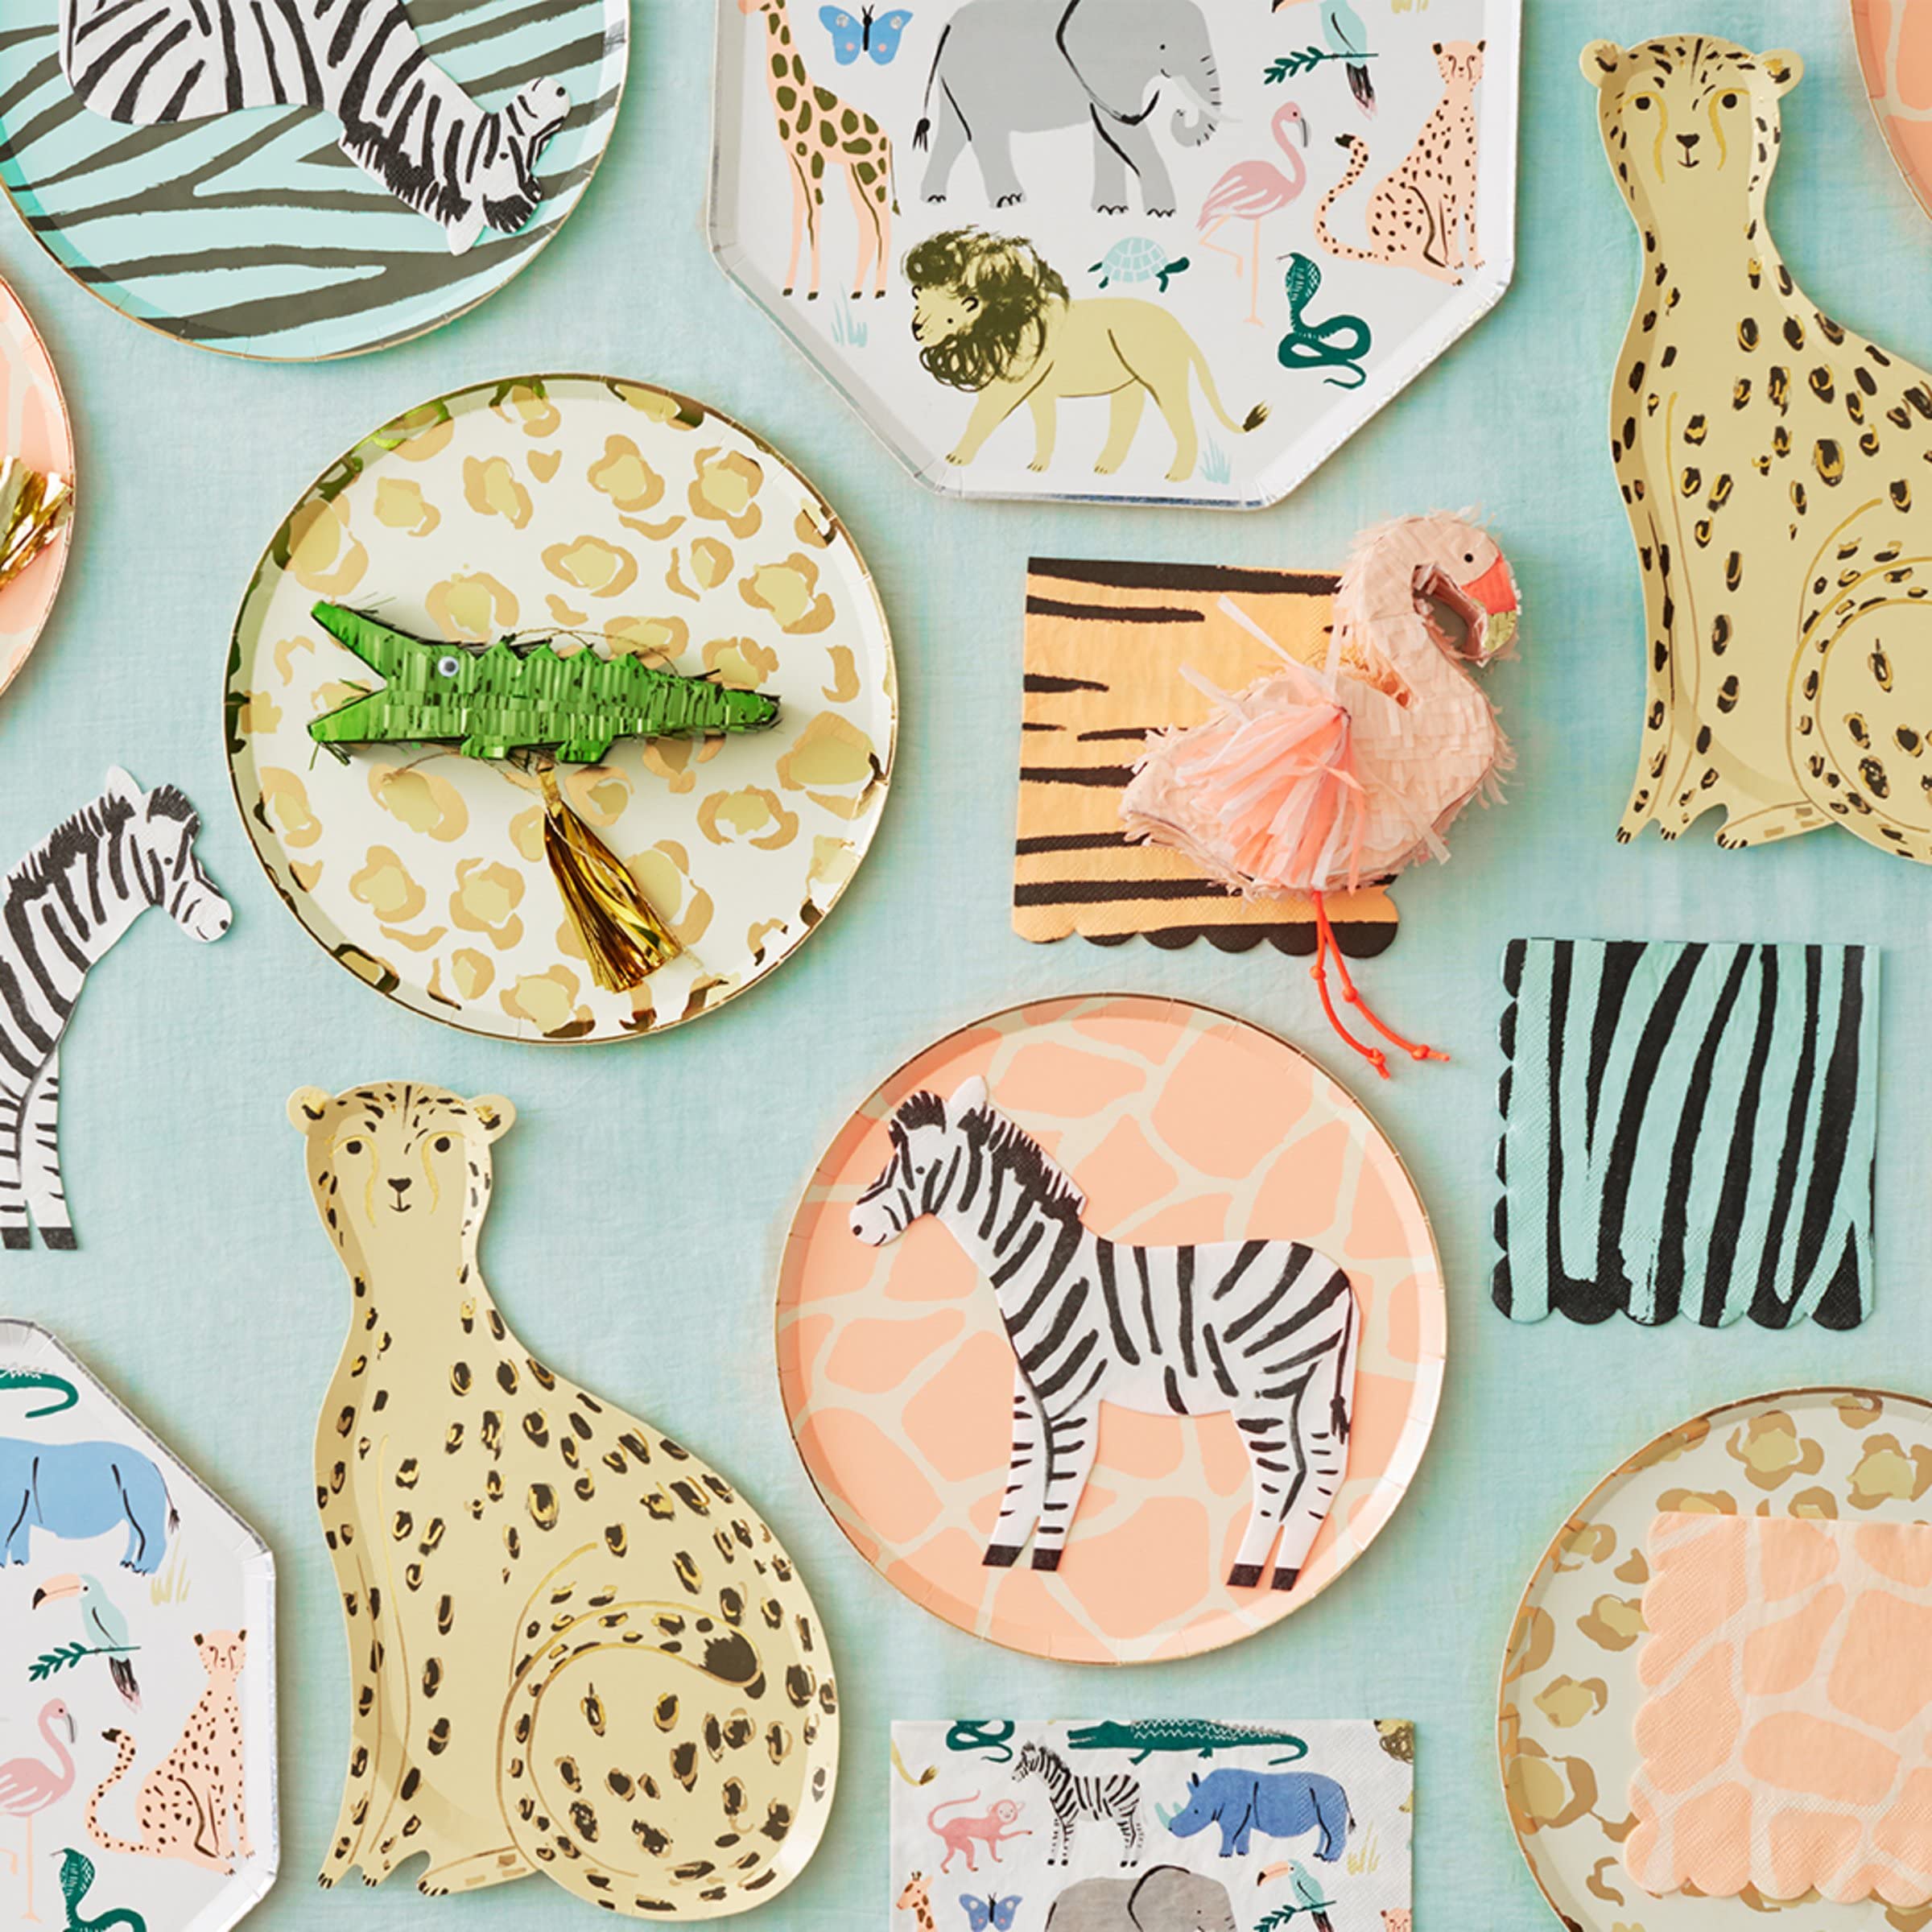 Meri Meri Safari Animals Dinner Plates - Pack of 8